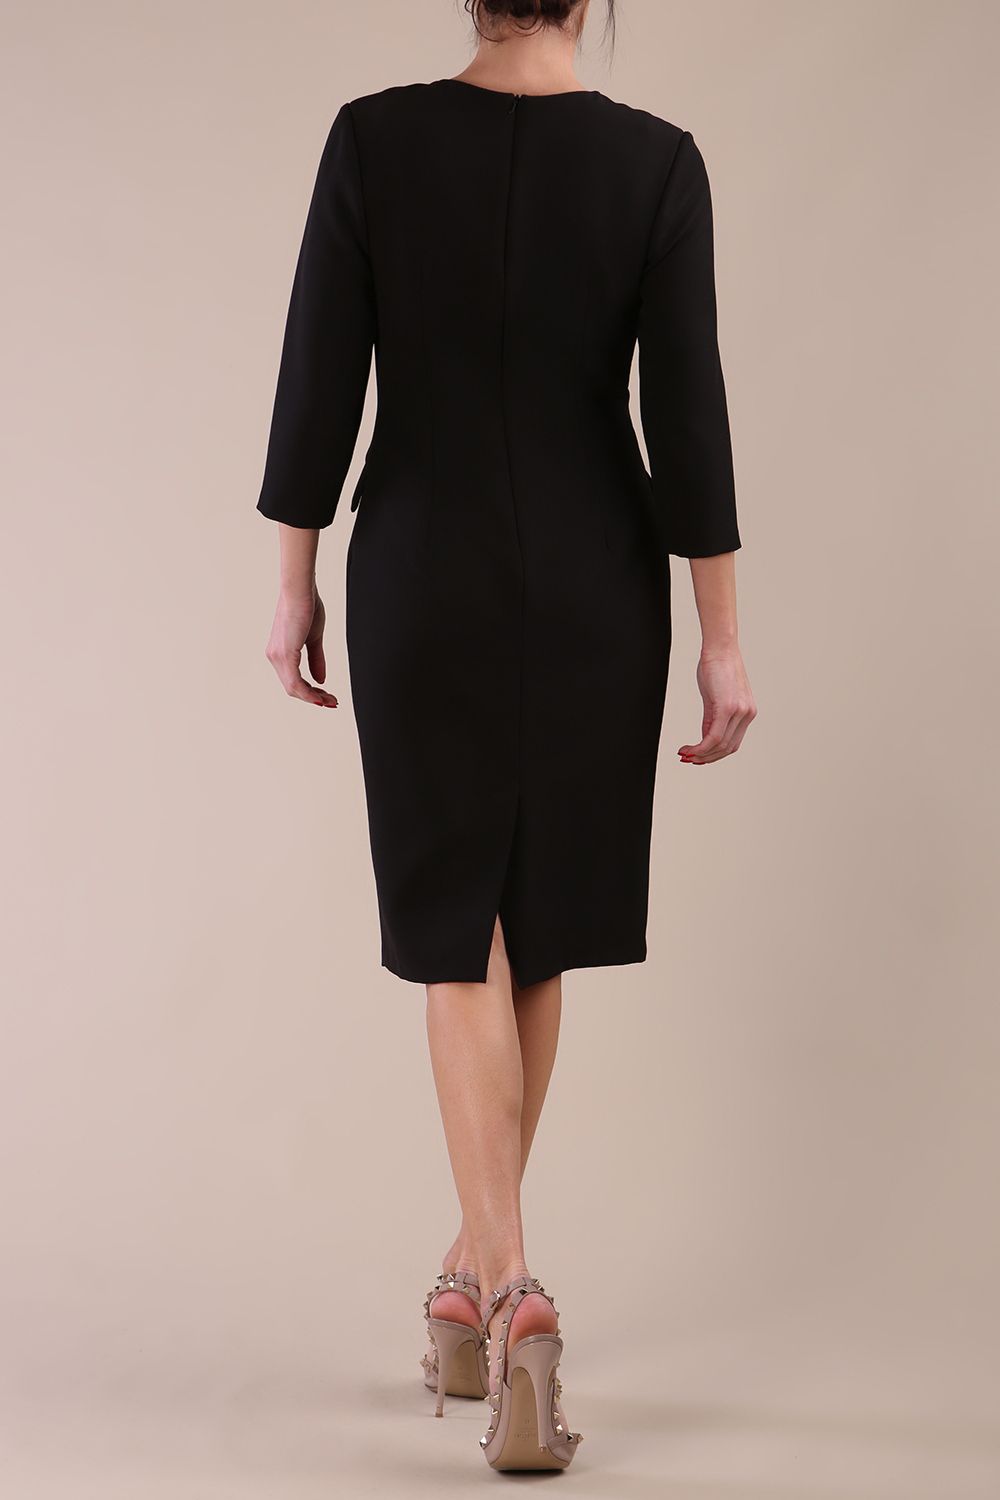 Model wearing back diva catwalk Elsinor 3/4 Sleeve pencil skirt dress with two side pockets in Black 